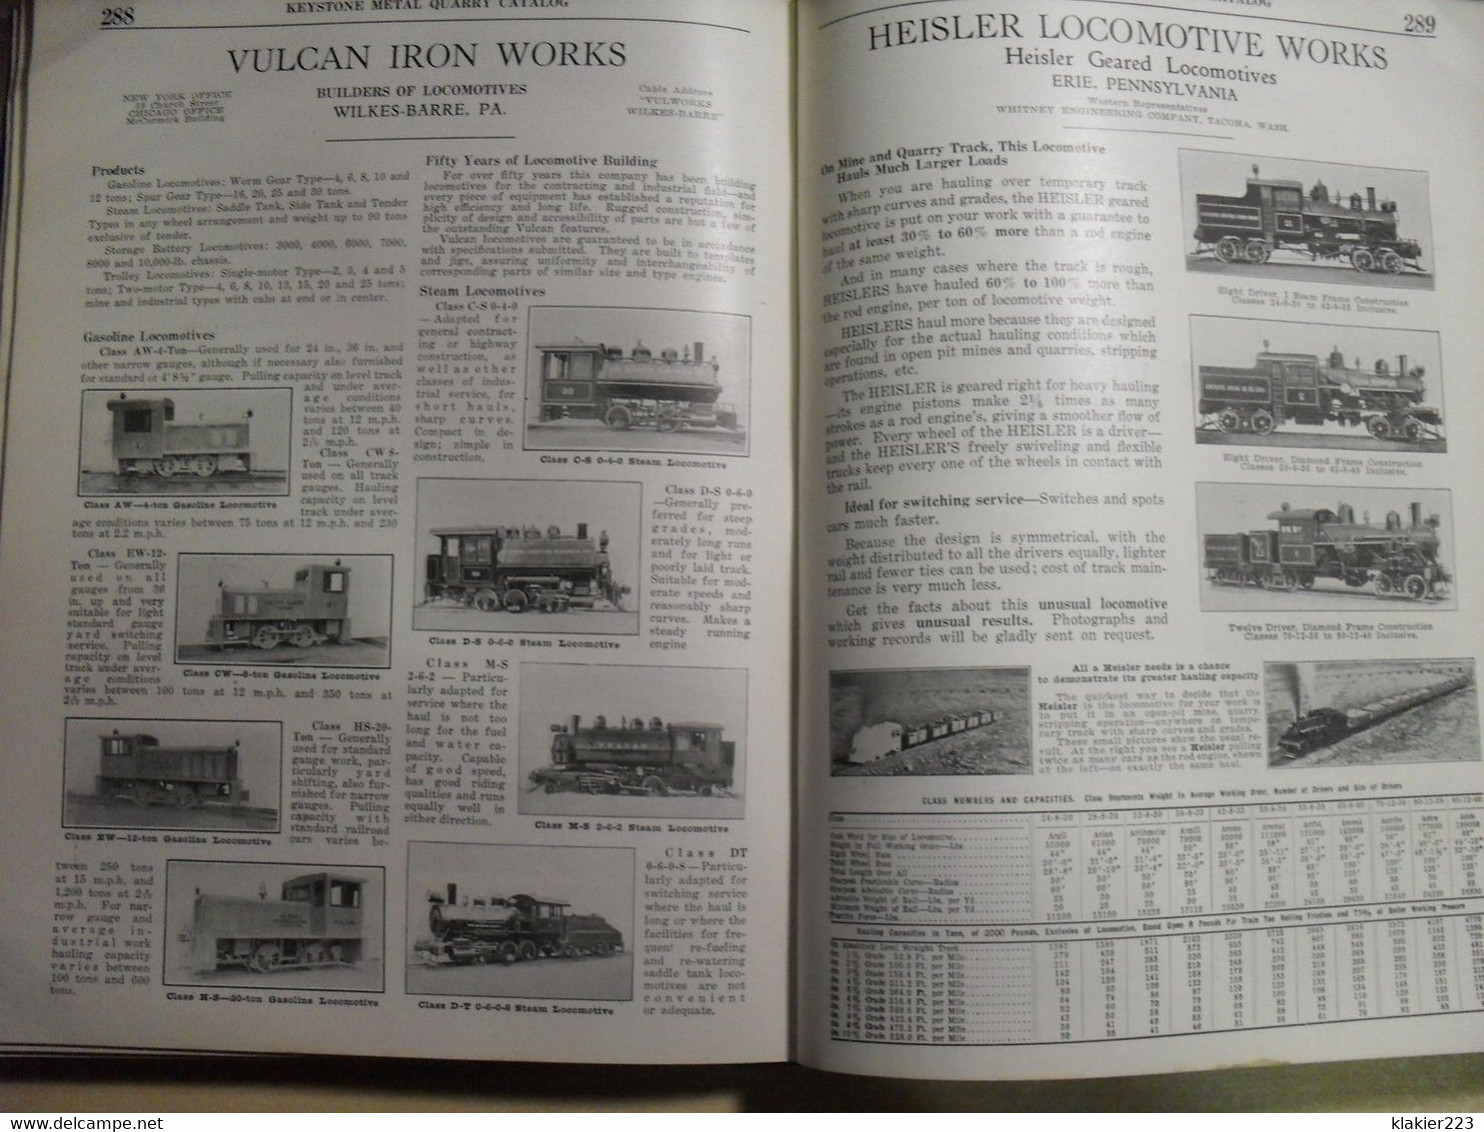 Keystone Metal Quarry Catalog 1927 - Ingeniería